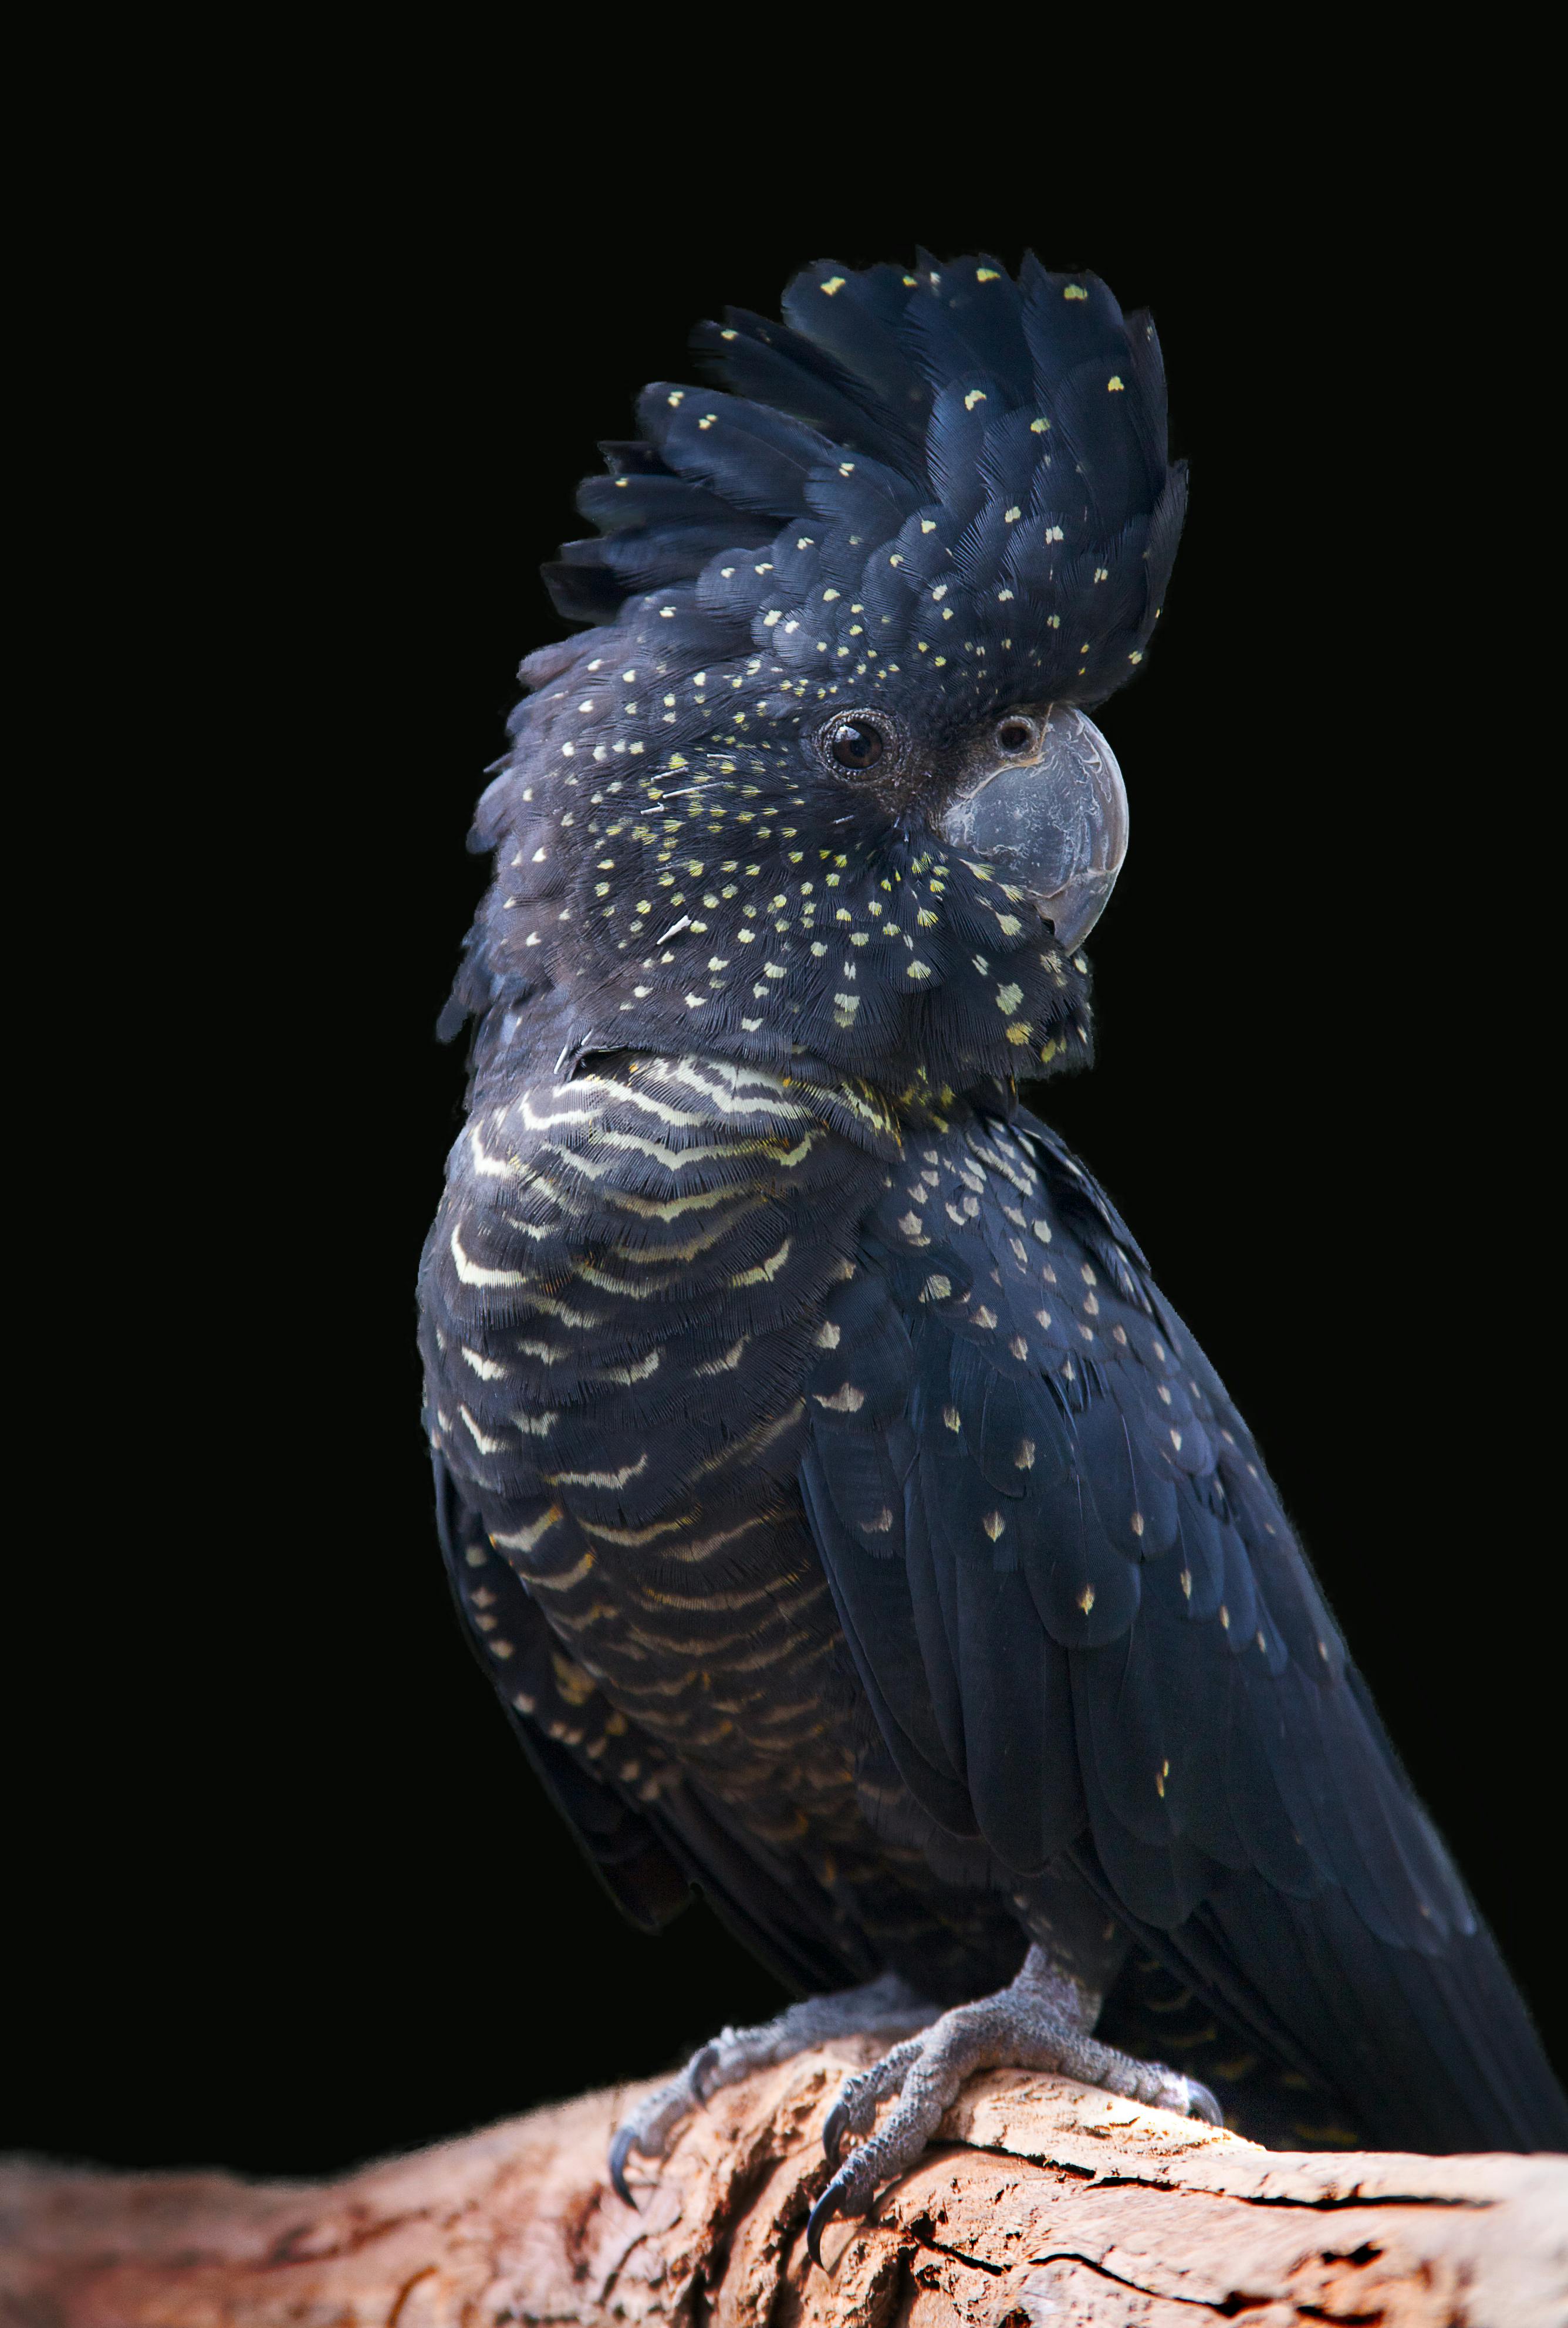 black-cockatoo-portrait-2021-08-26-16-38-29-utc.jpg